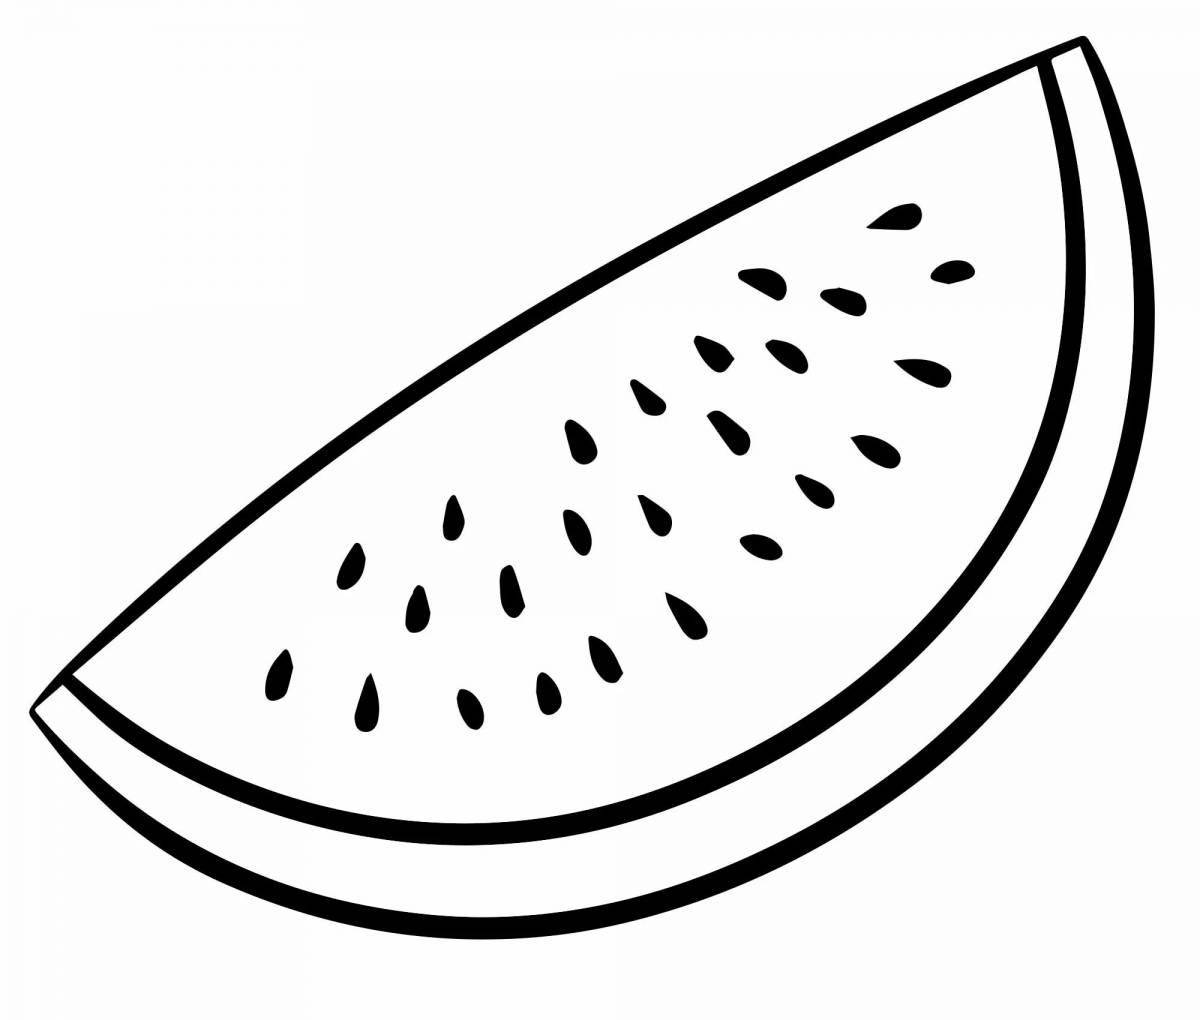 Coloring juicy slice of watermelon